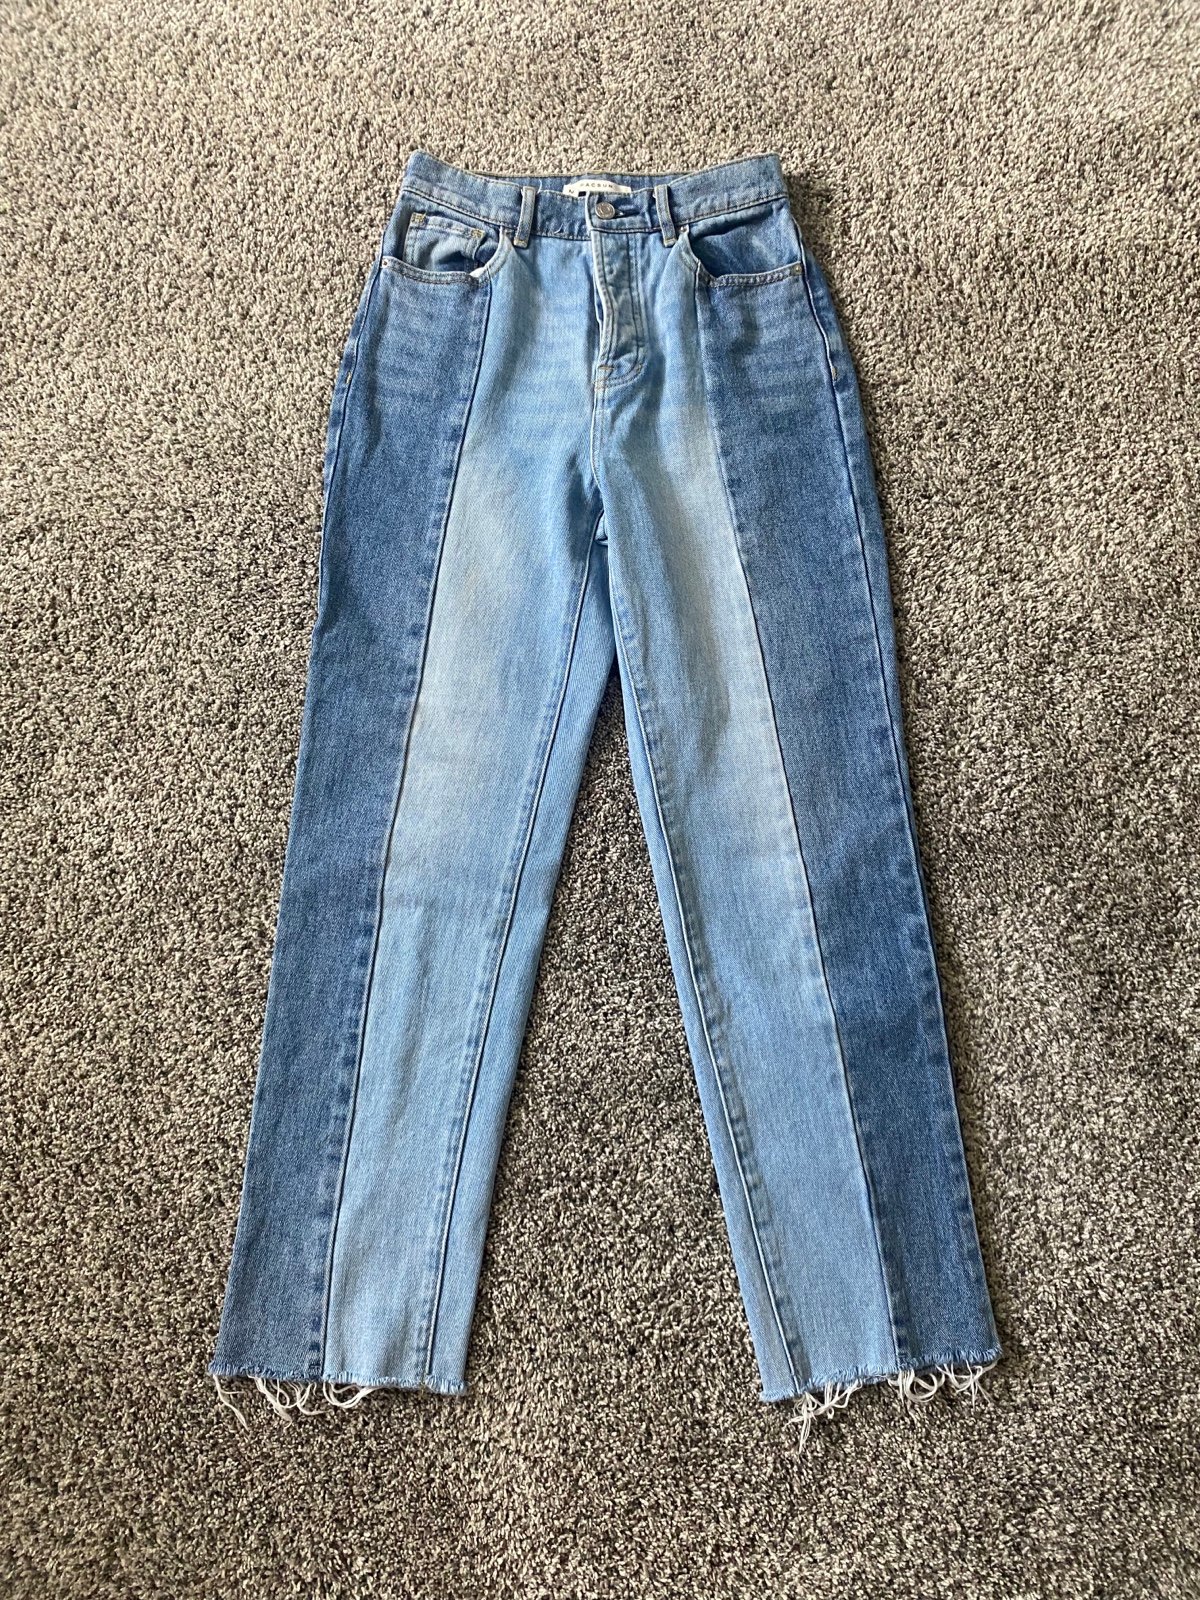 Gorgeous PacSun jeans j1aXfOYeM Buying Cheap